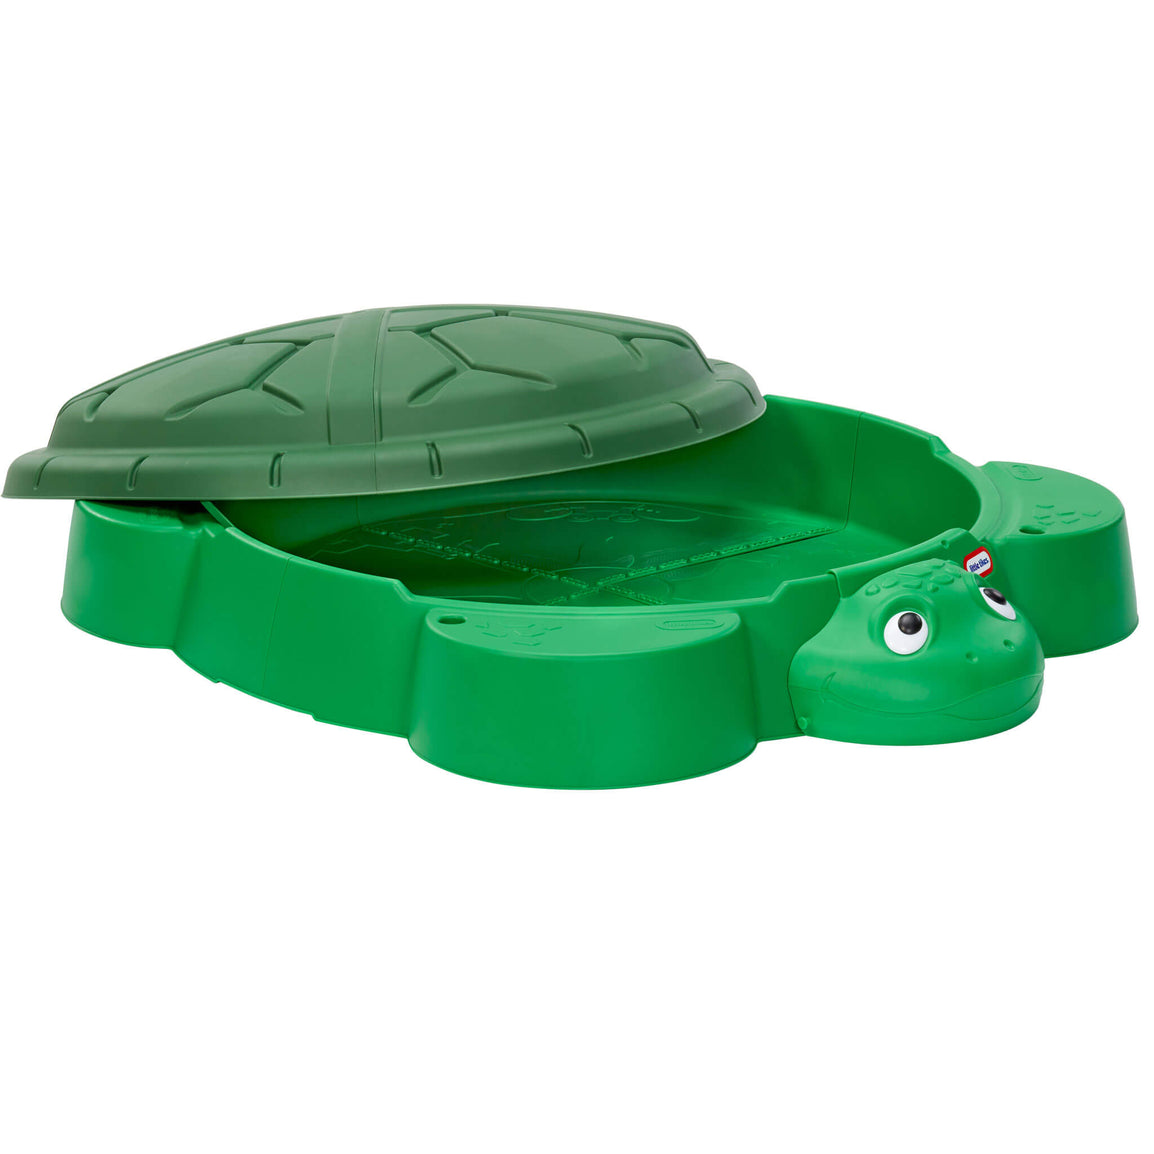 Turtle Sandbox - Official Little Tikes Website